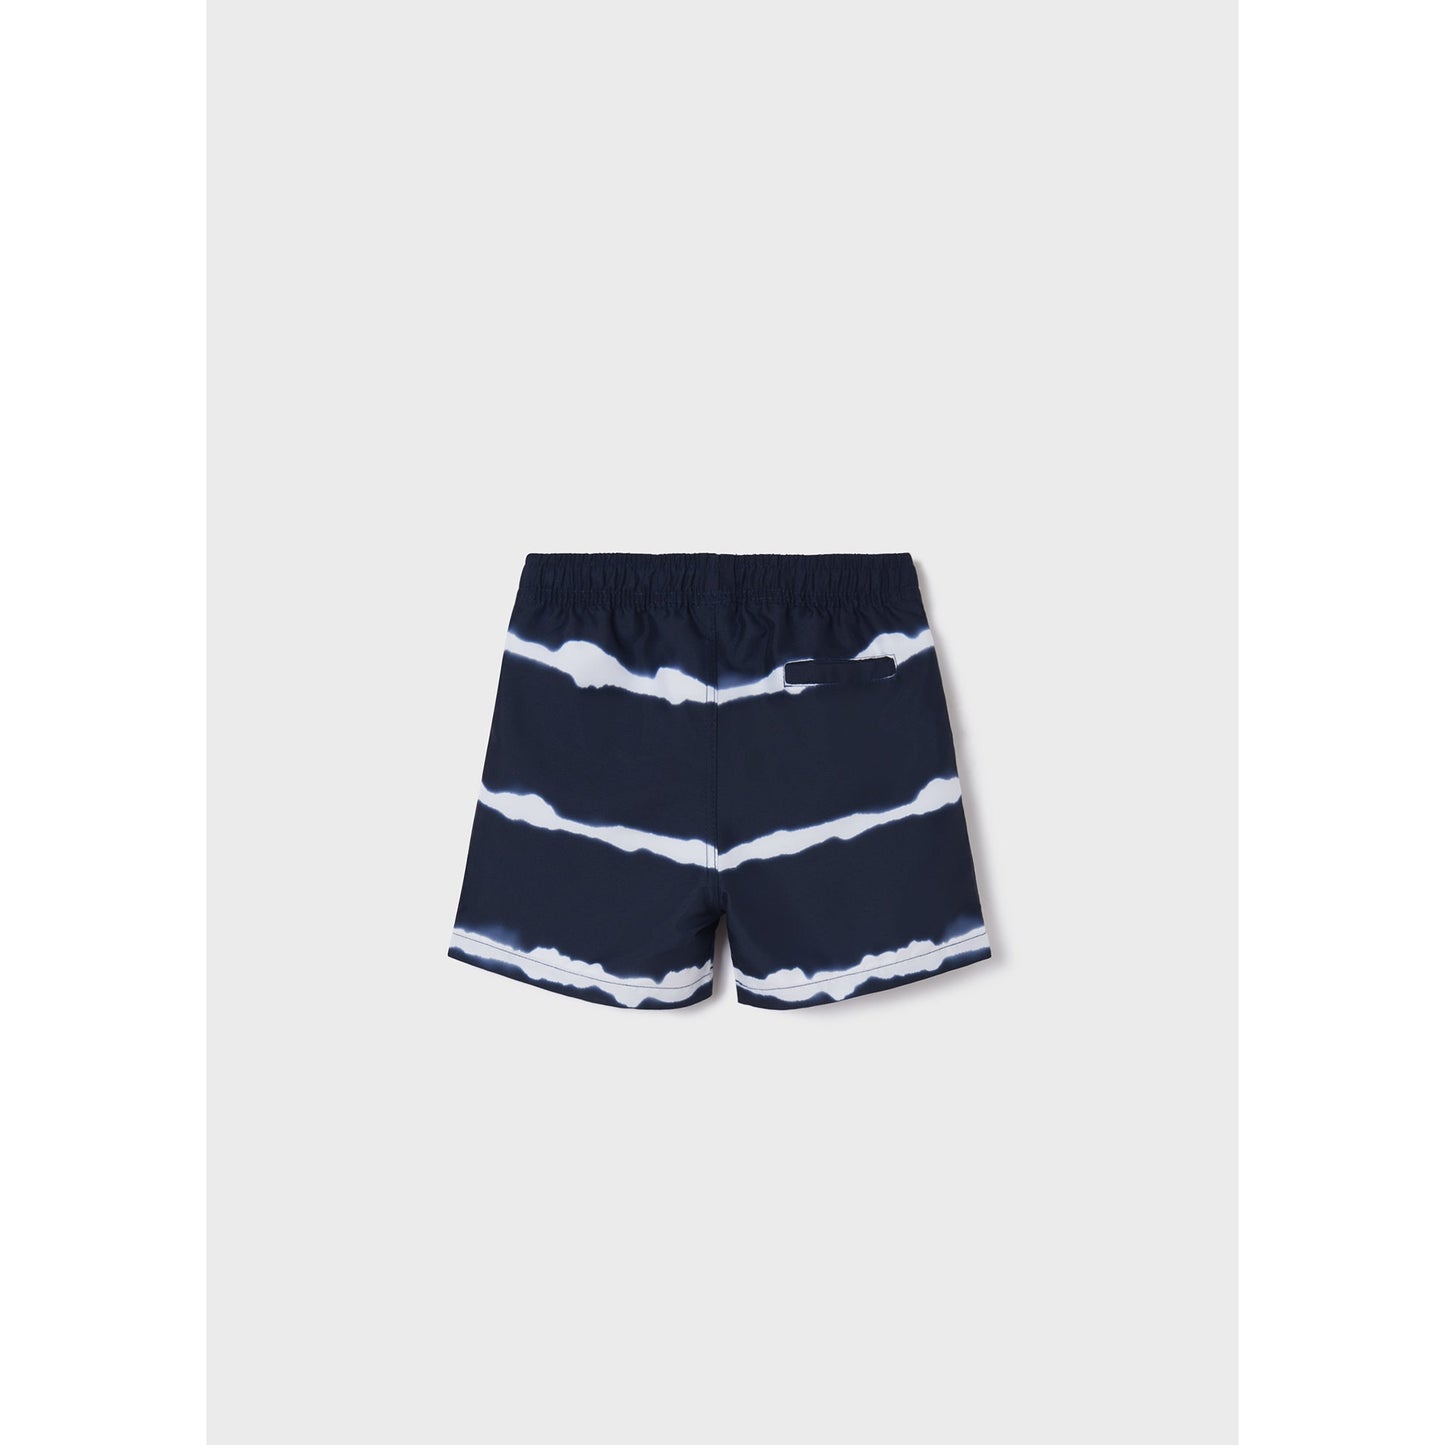 Nukutavake Tie Dye Swim Shorts _Navy 6646-79